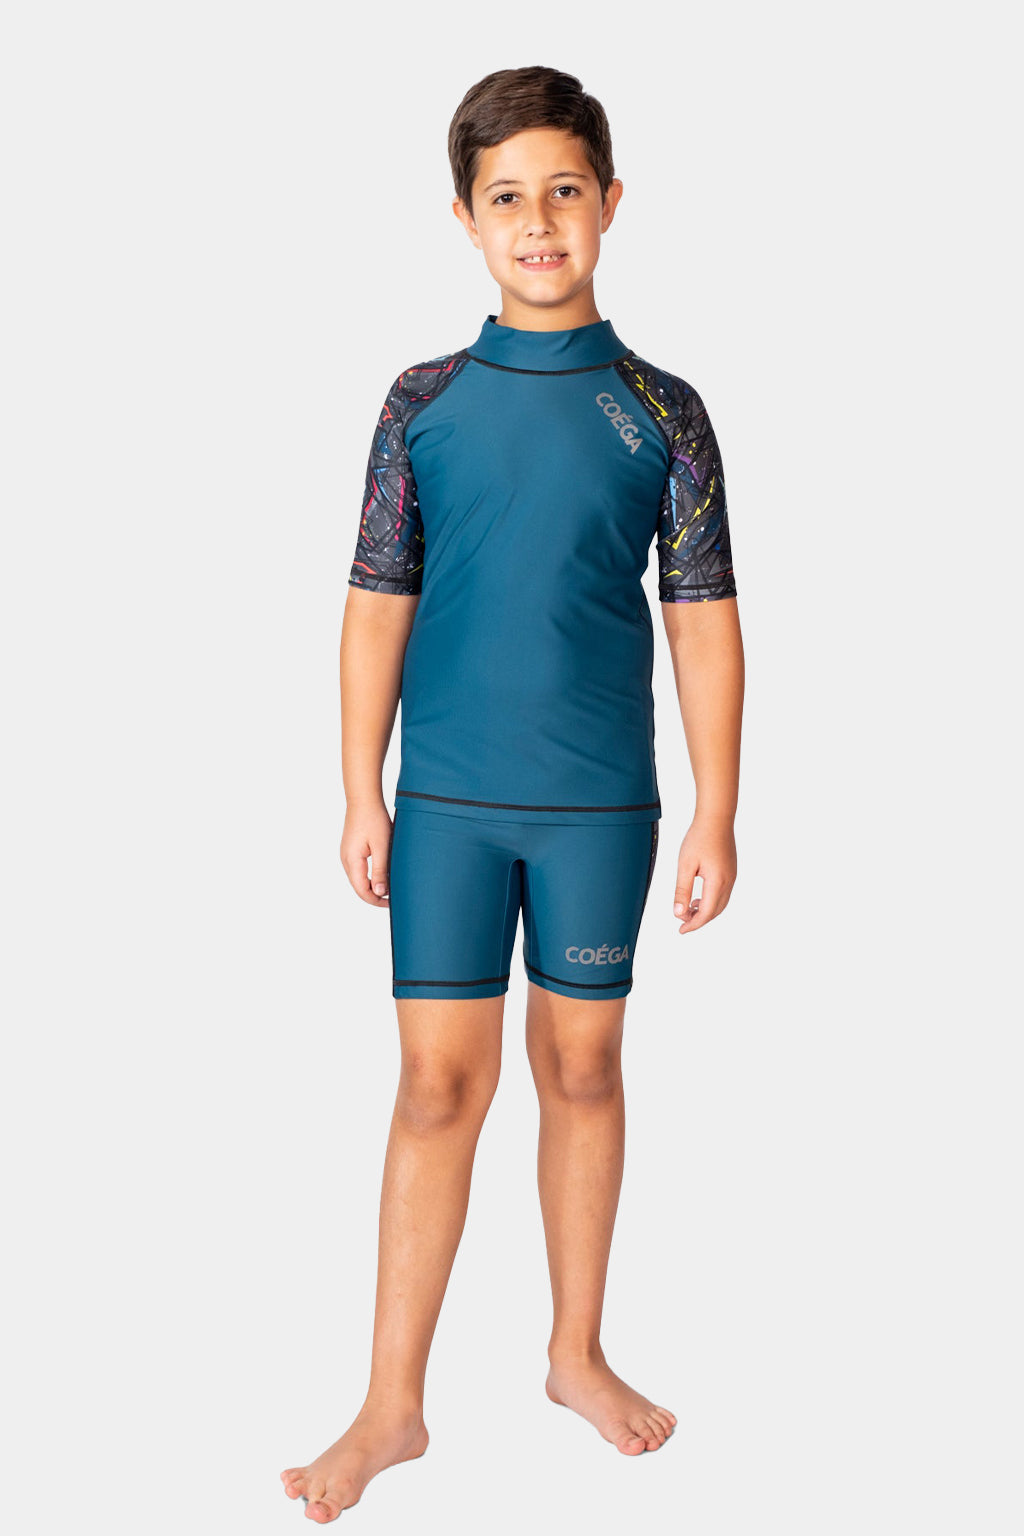 Coega - Boys Youth Swim Suit Two Piece